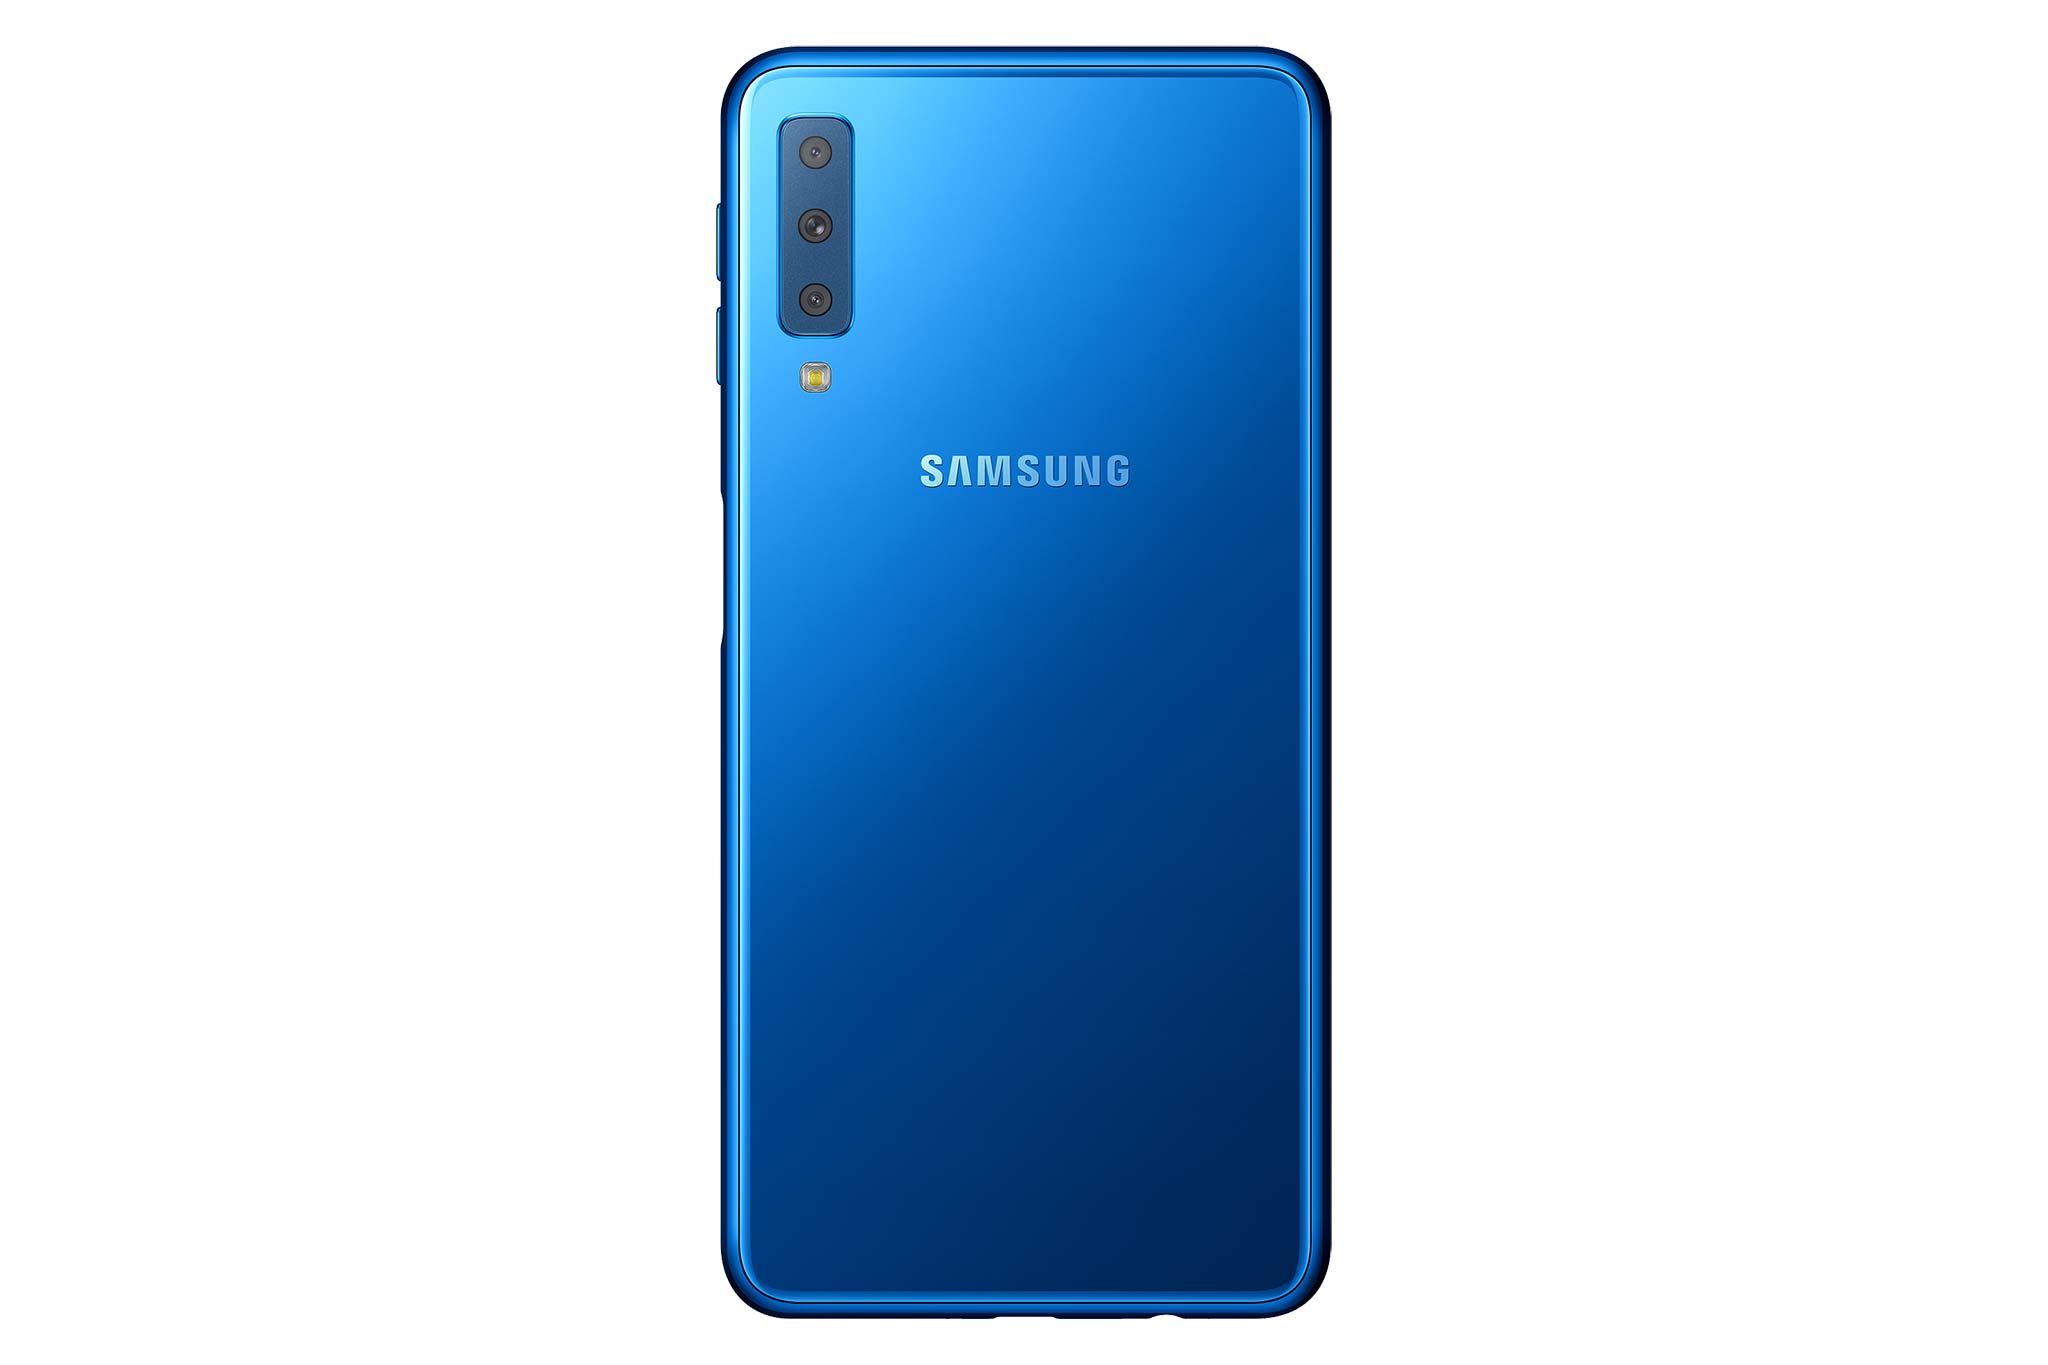 Samsung_Galaxy_A7_2018_2019_tinhte_3.jpg